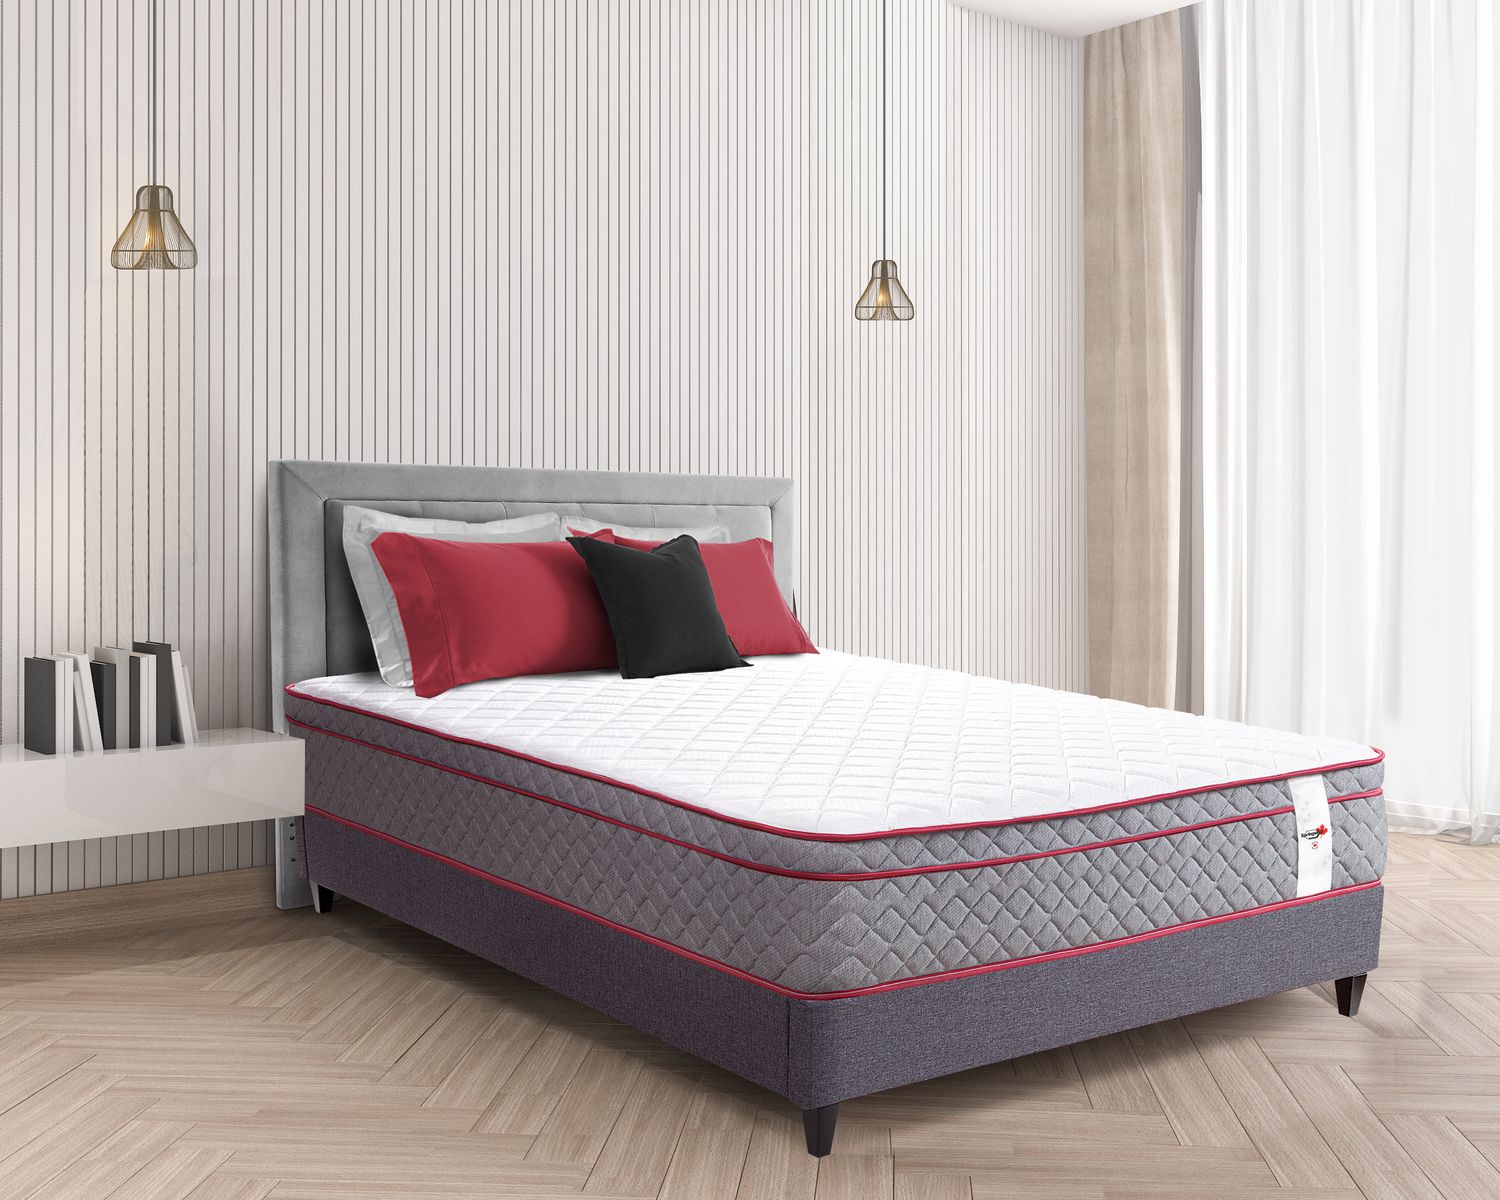 springwall mattress sleep country